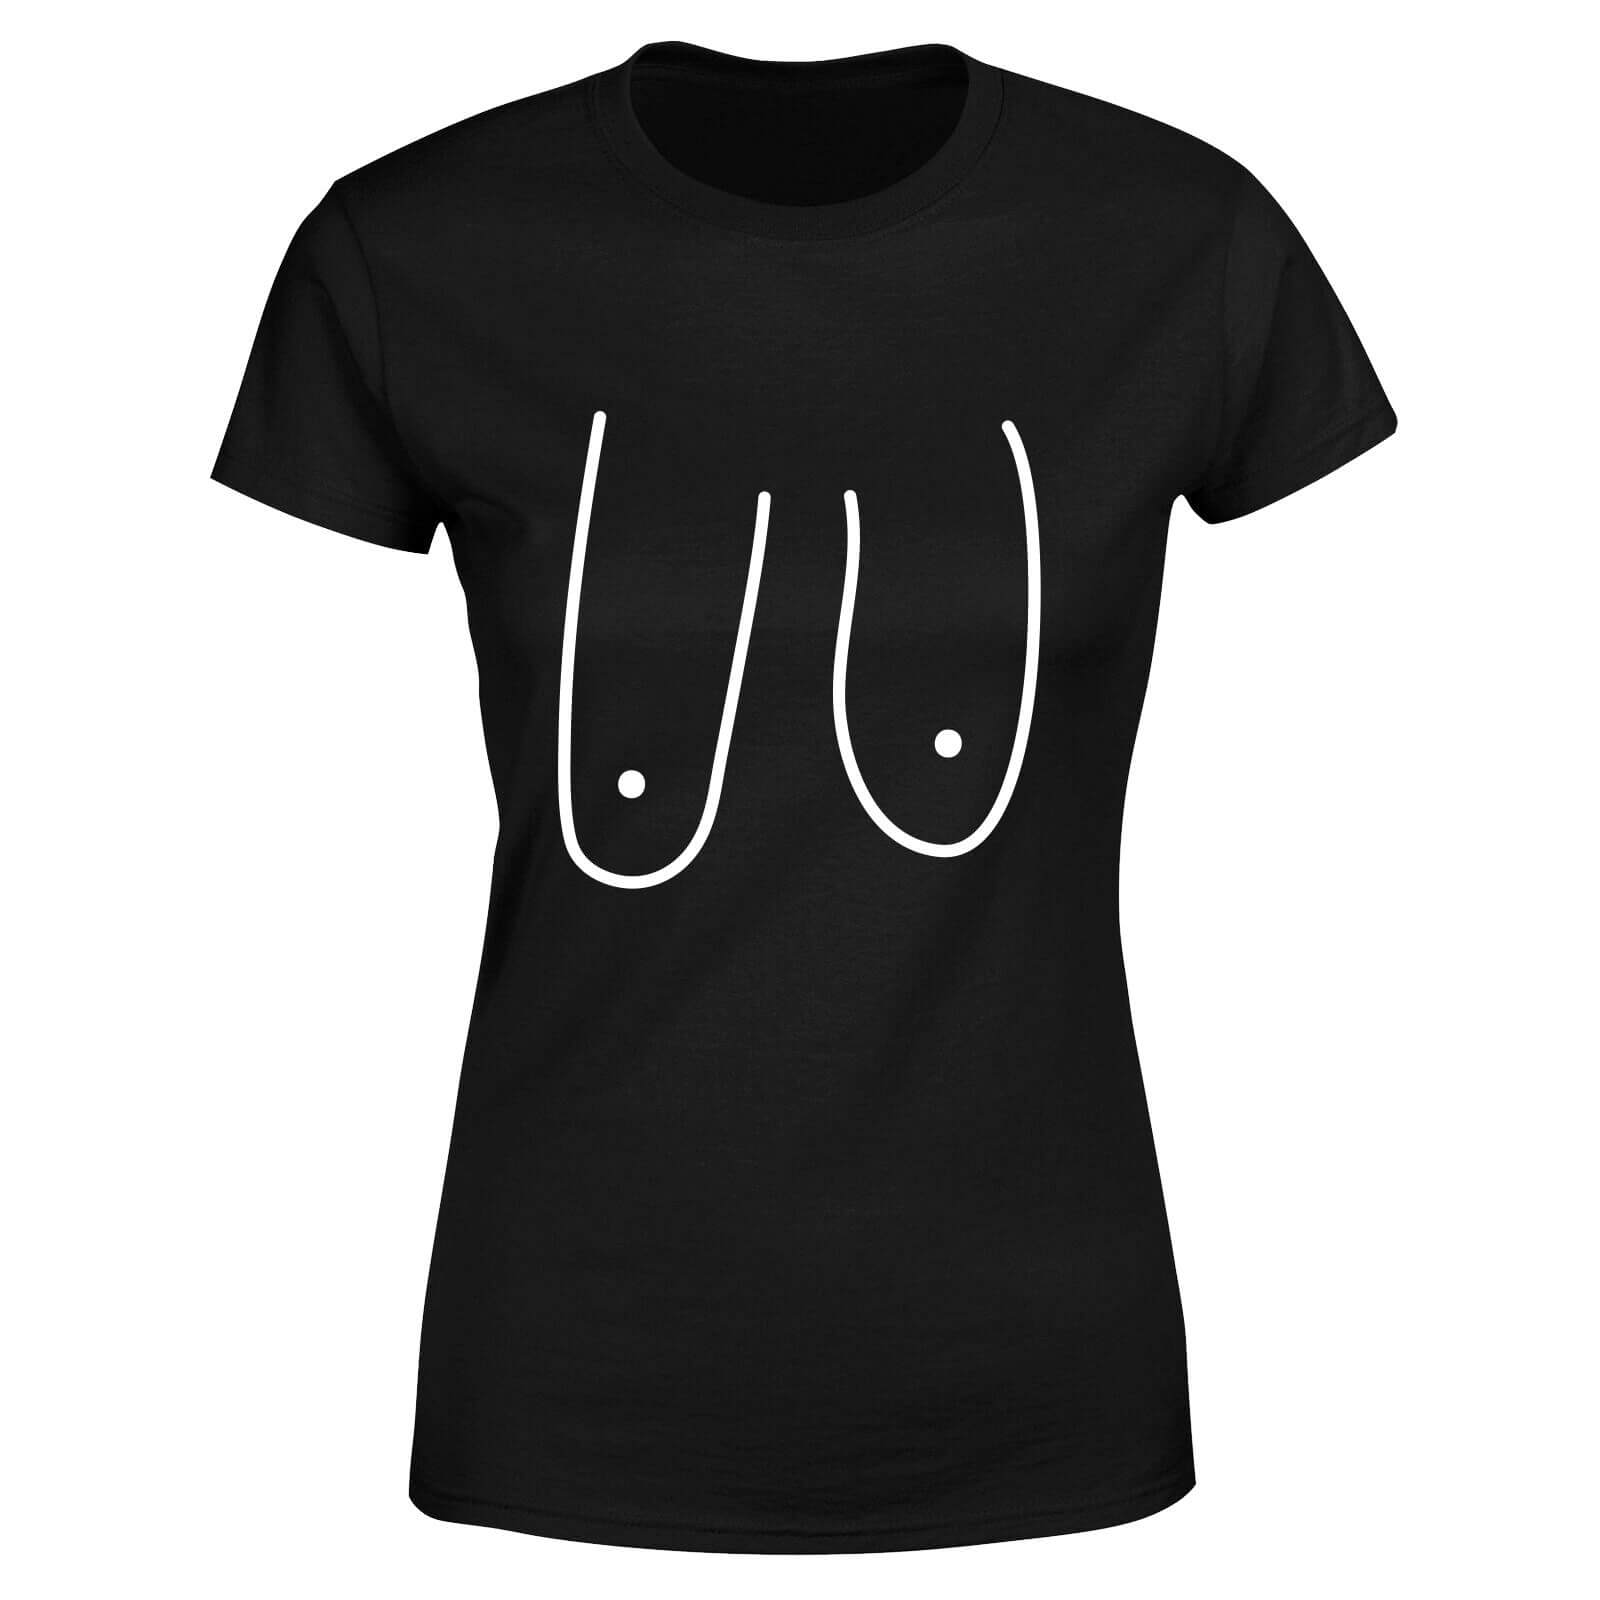 Droopy Norks Women's T-Shirt - Black - XS - Black